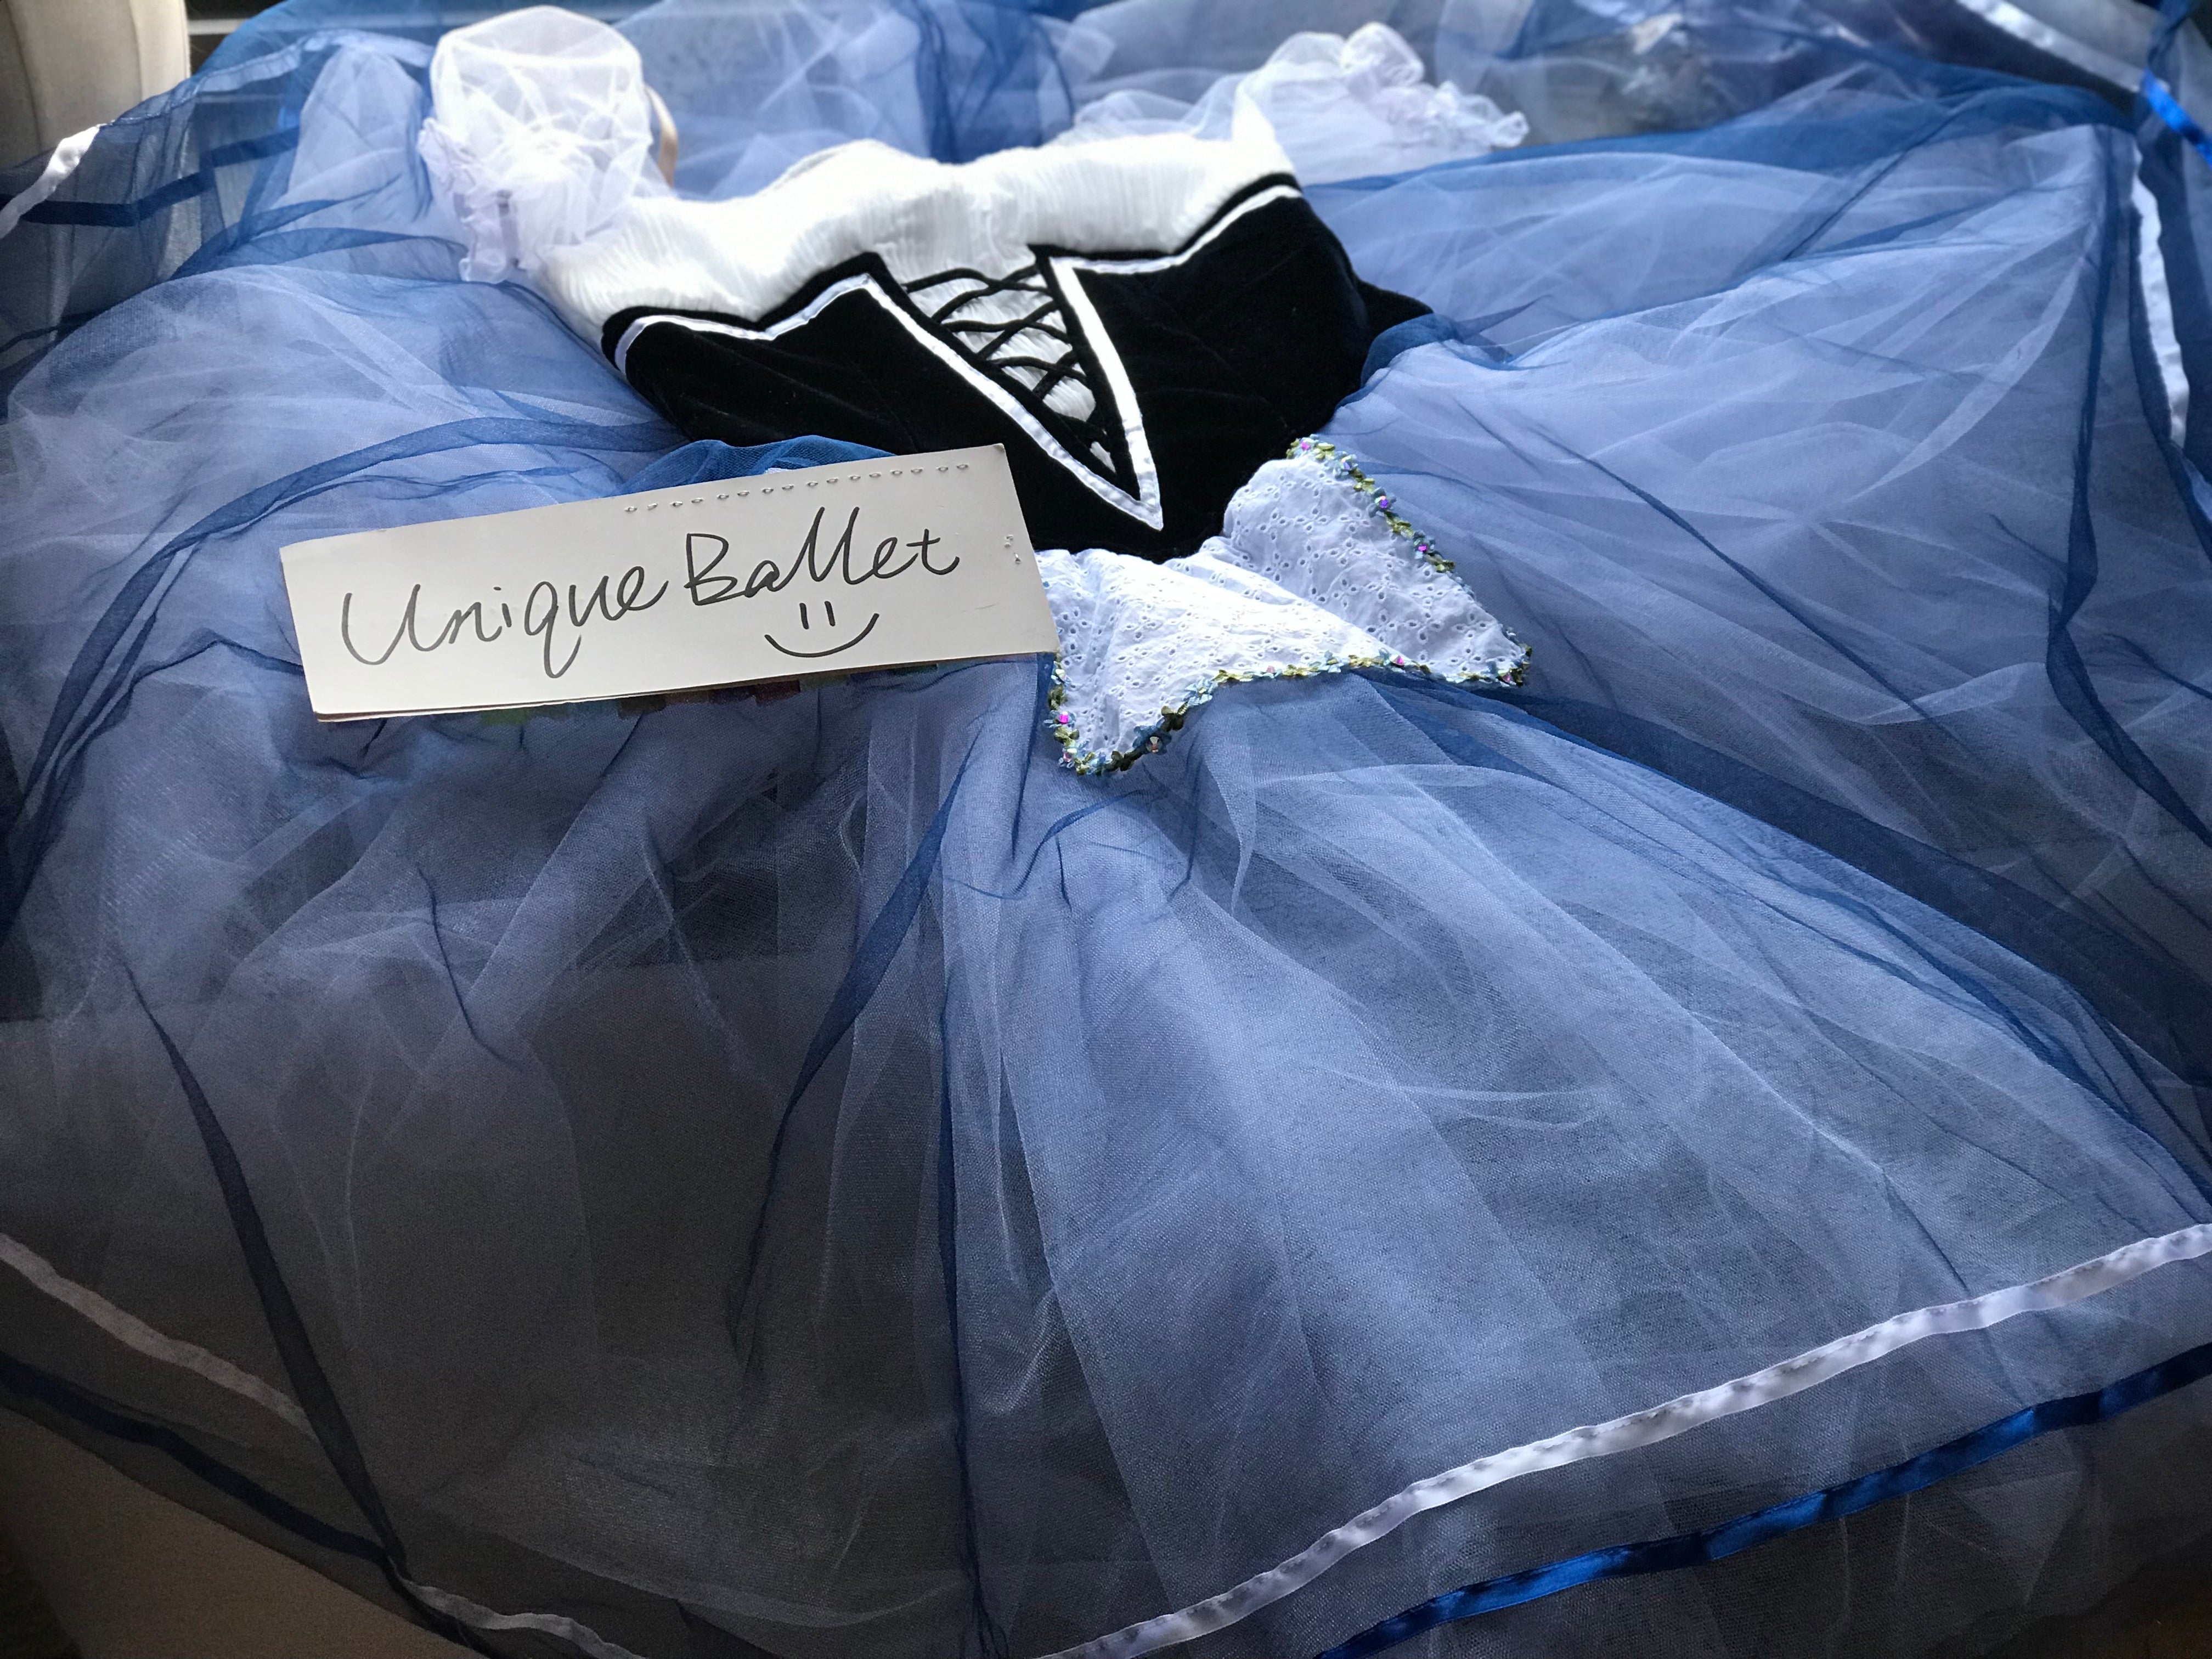 Professional Royal Blue Giselle Romantic Ballet TuTu Long Dress Peasant Costume-YL-RGSL04DRKBLUGD